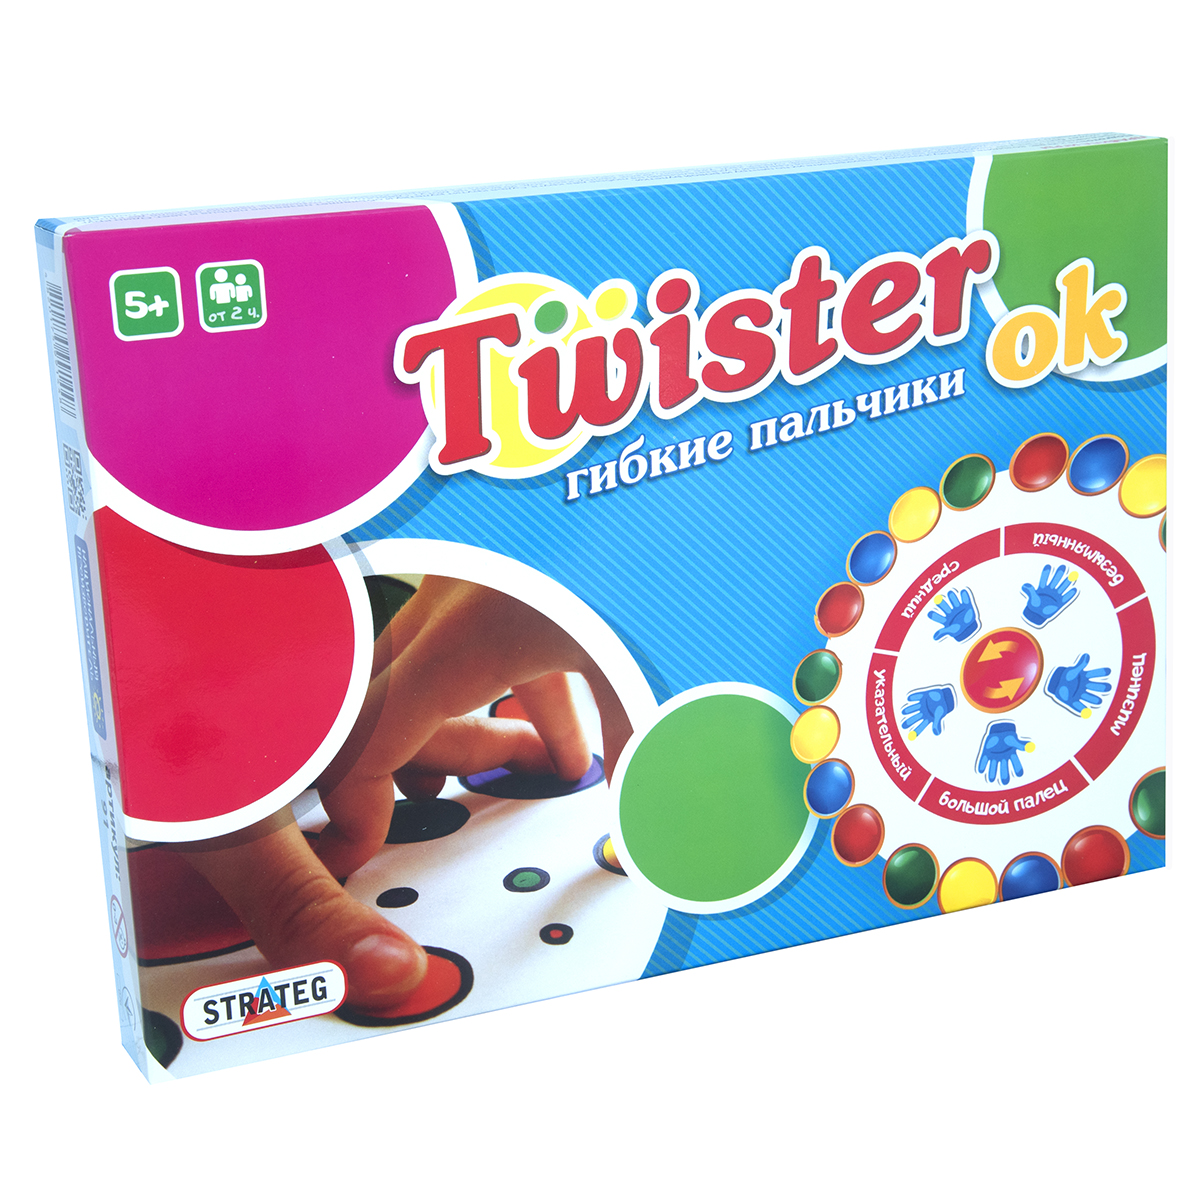 Game "Twister Ok" flexible fingers (rus.) (91)